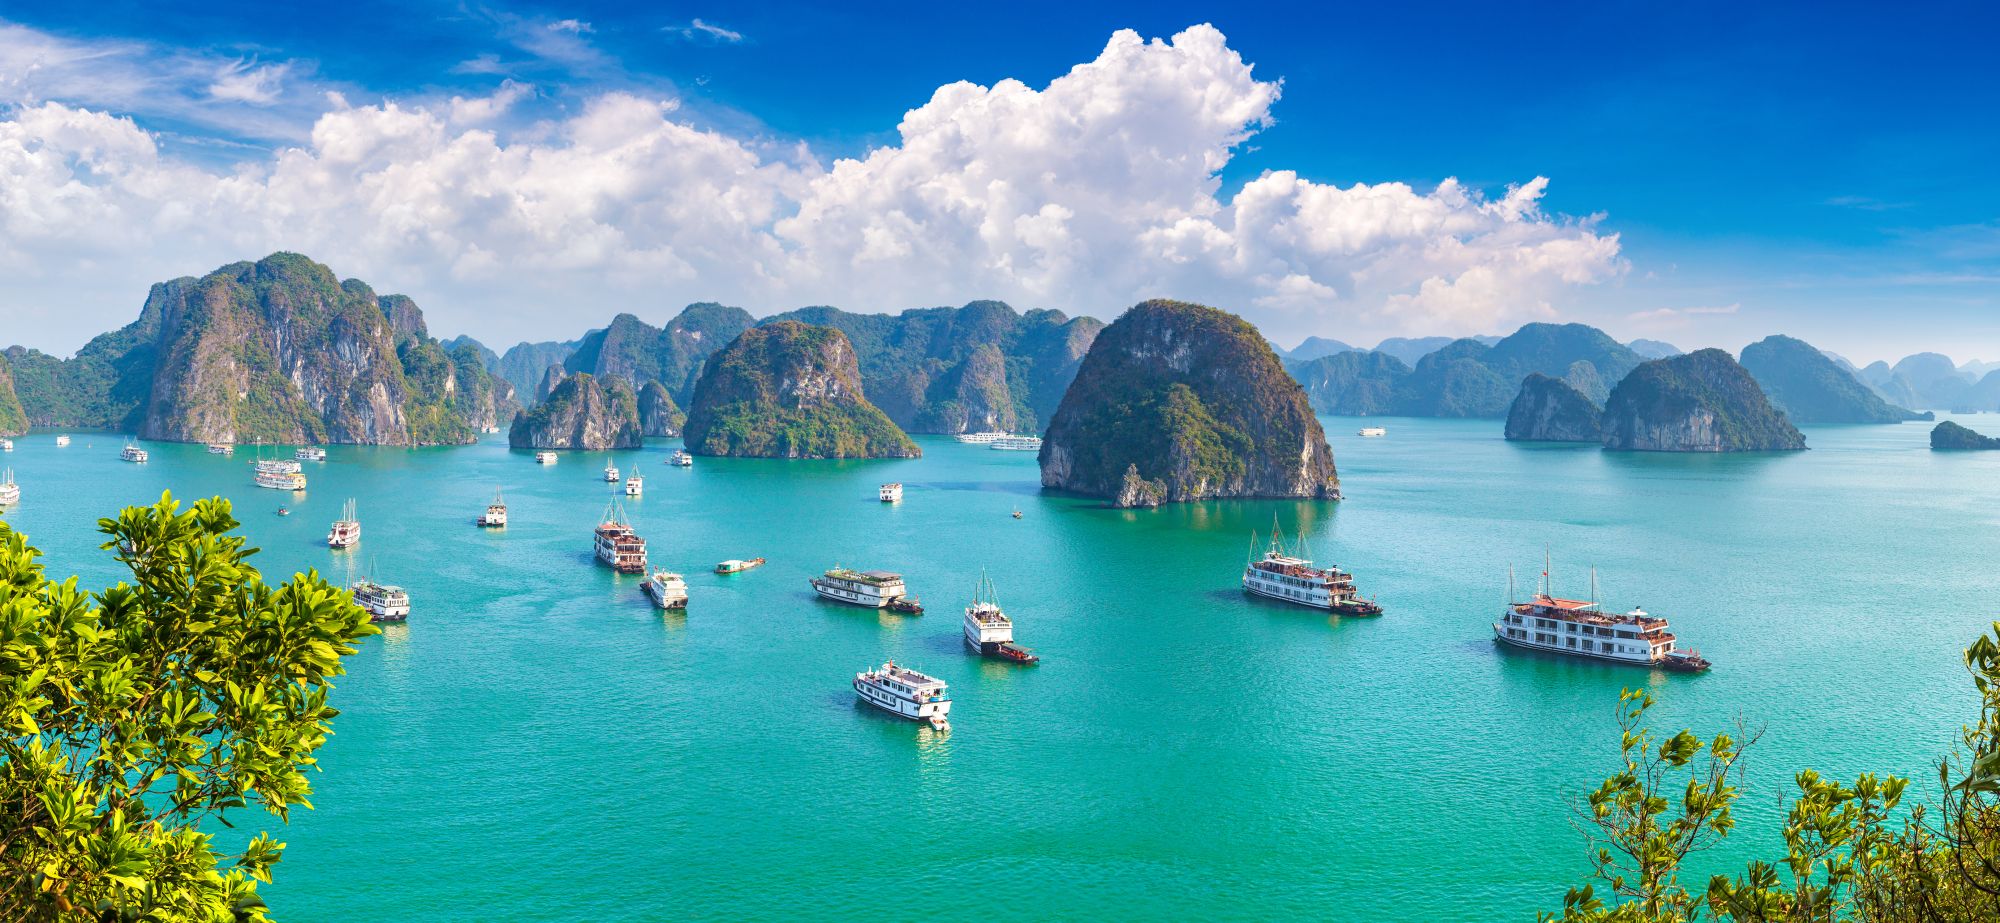 Vietnam Halong Bay overview